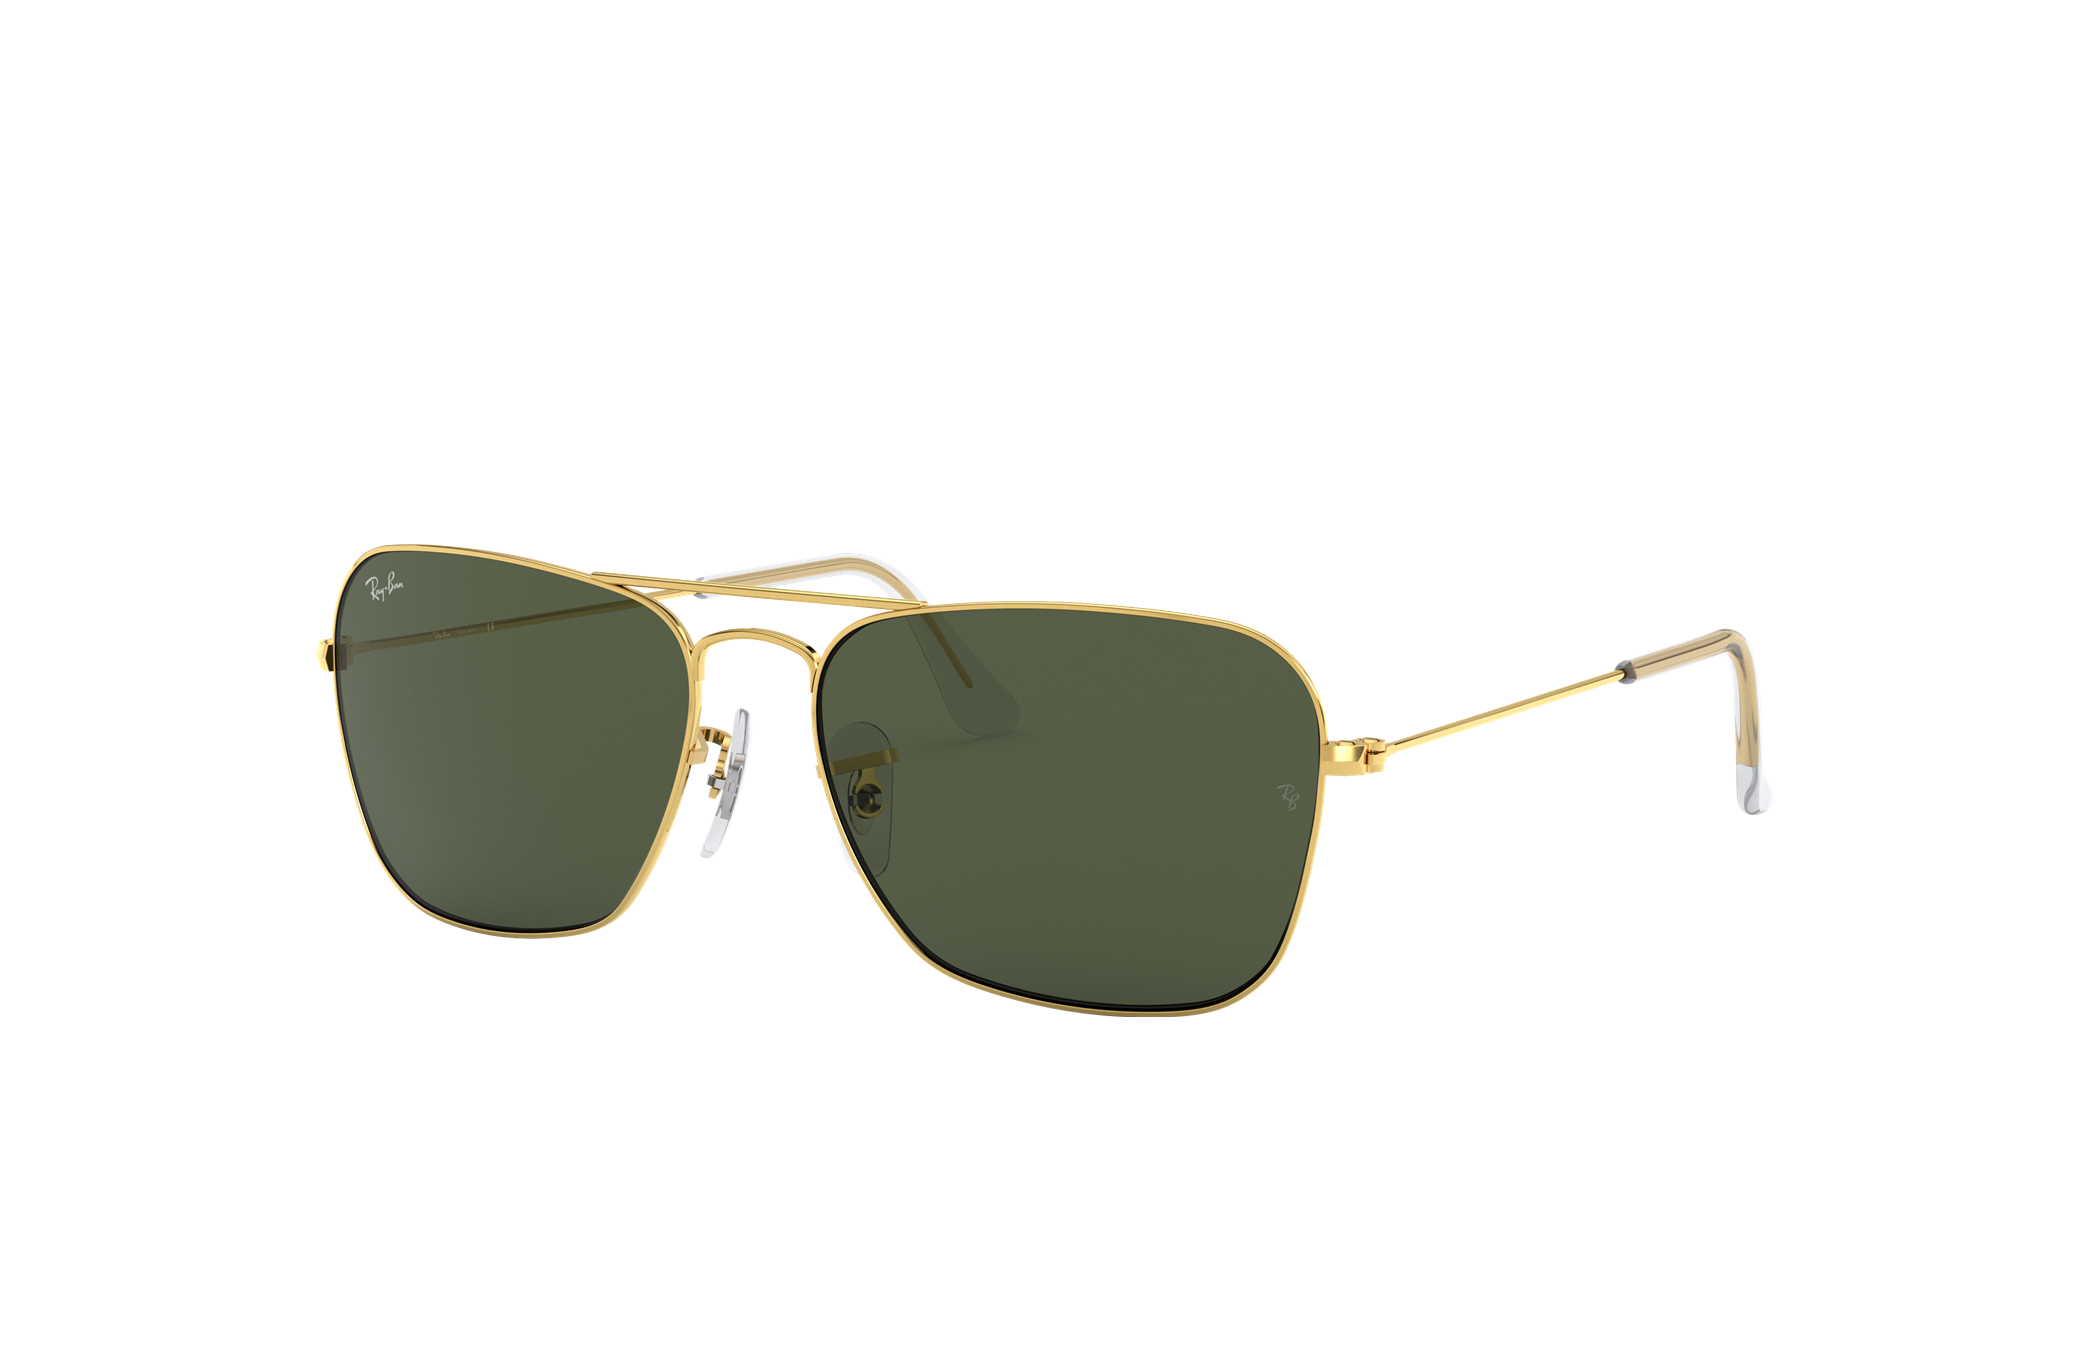 Buy Ray-Ban Ray-Ban Sunglasses | Black Sunglasses ( 0Rb3706 | Pillow |  Black Frame | Grey Lens ) Sunglasses Online.